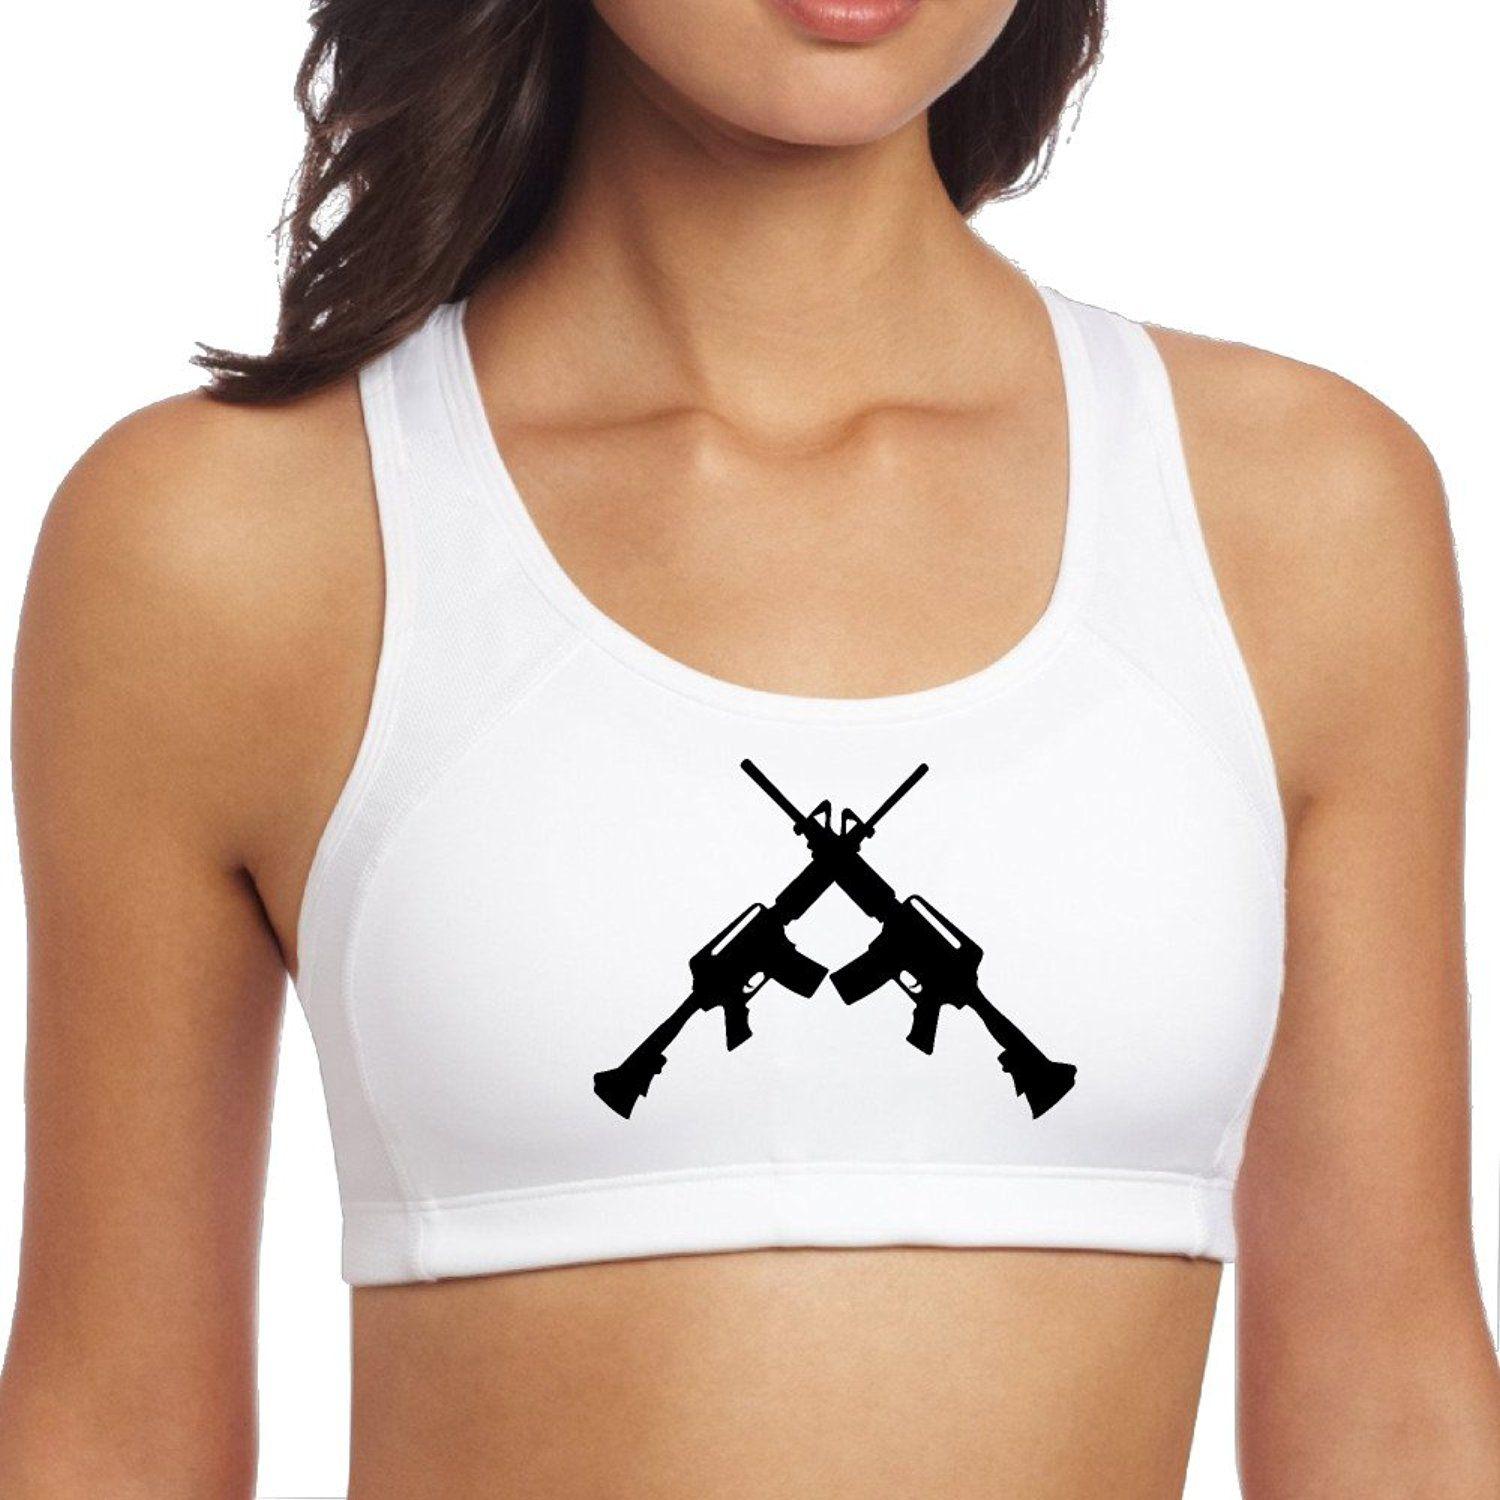 M16 Logo - Buy Womens Cross Guns AR15 M16 Logo Yoga Sports Bras in Cheap Price